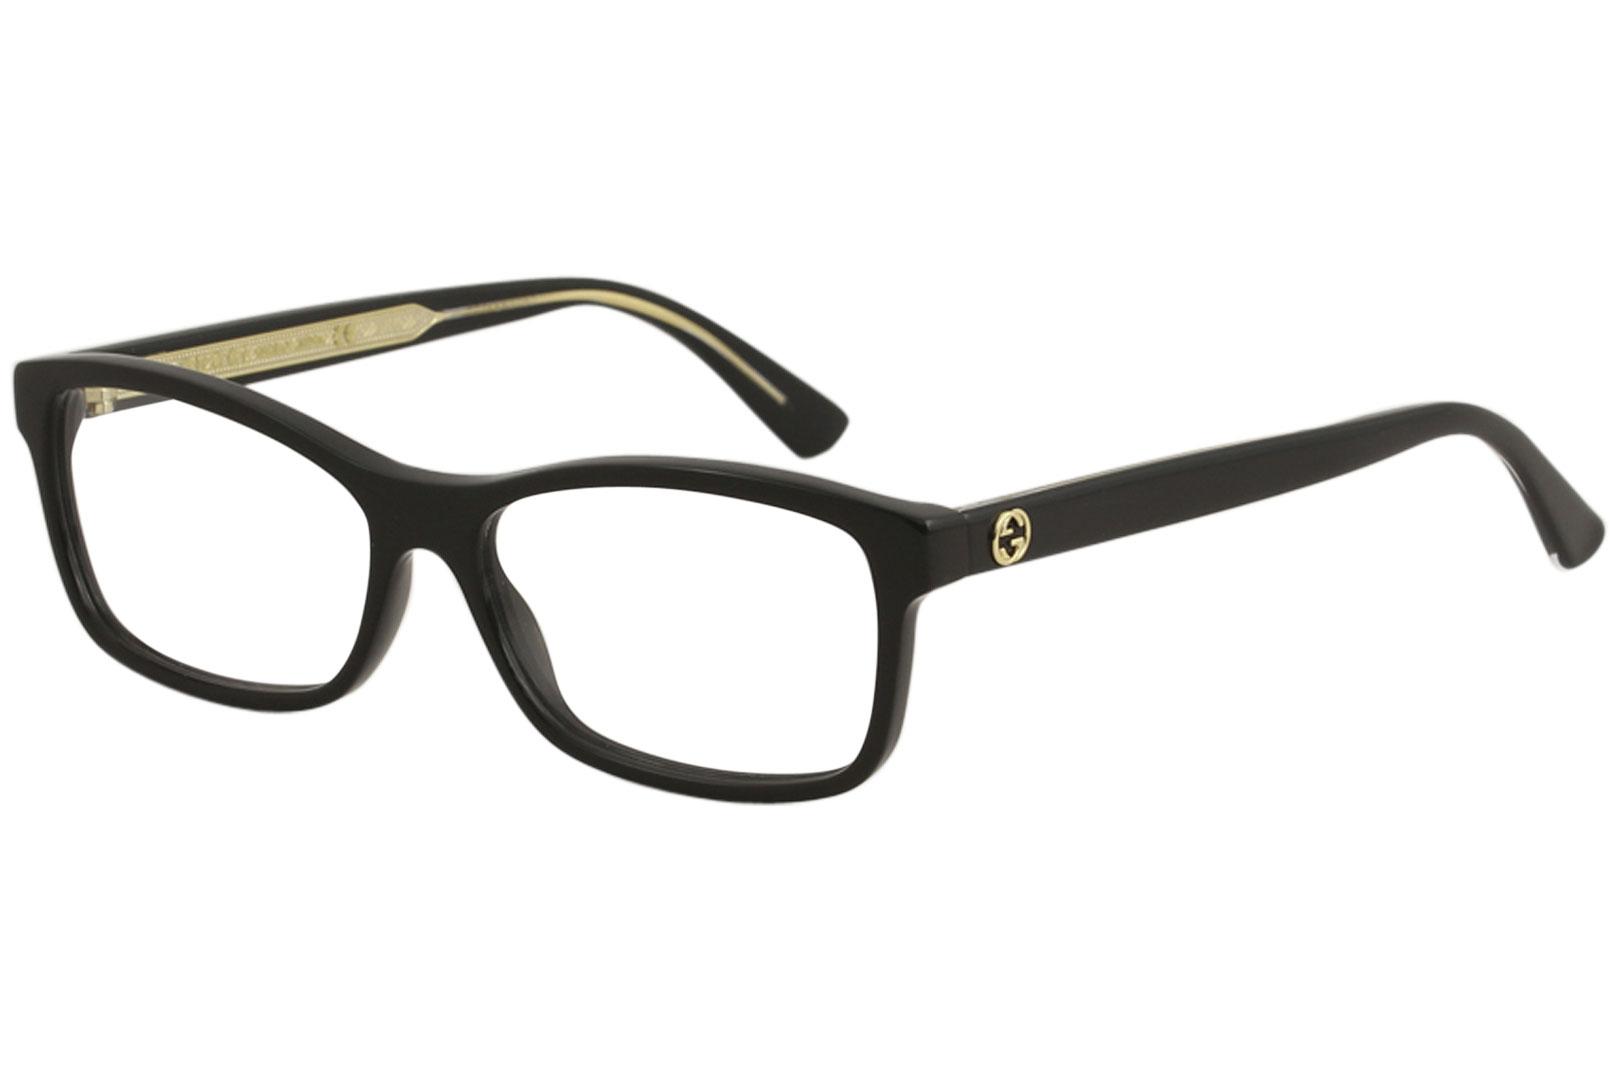 gucci glasses frames black, OFF 74%,www 